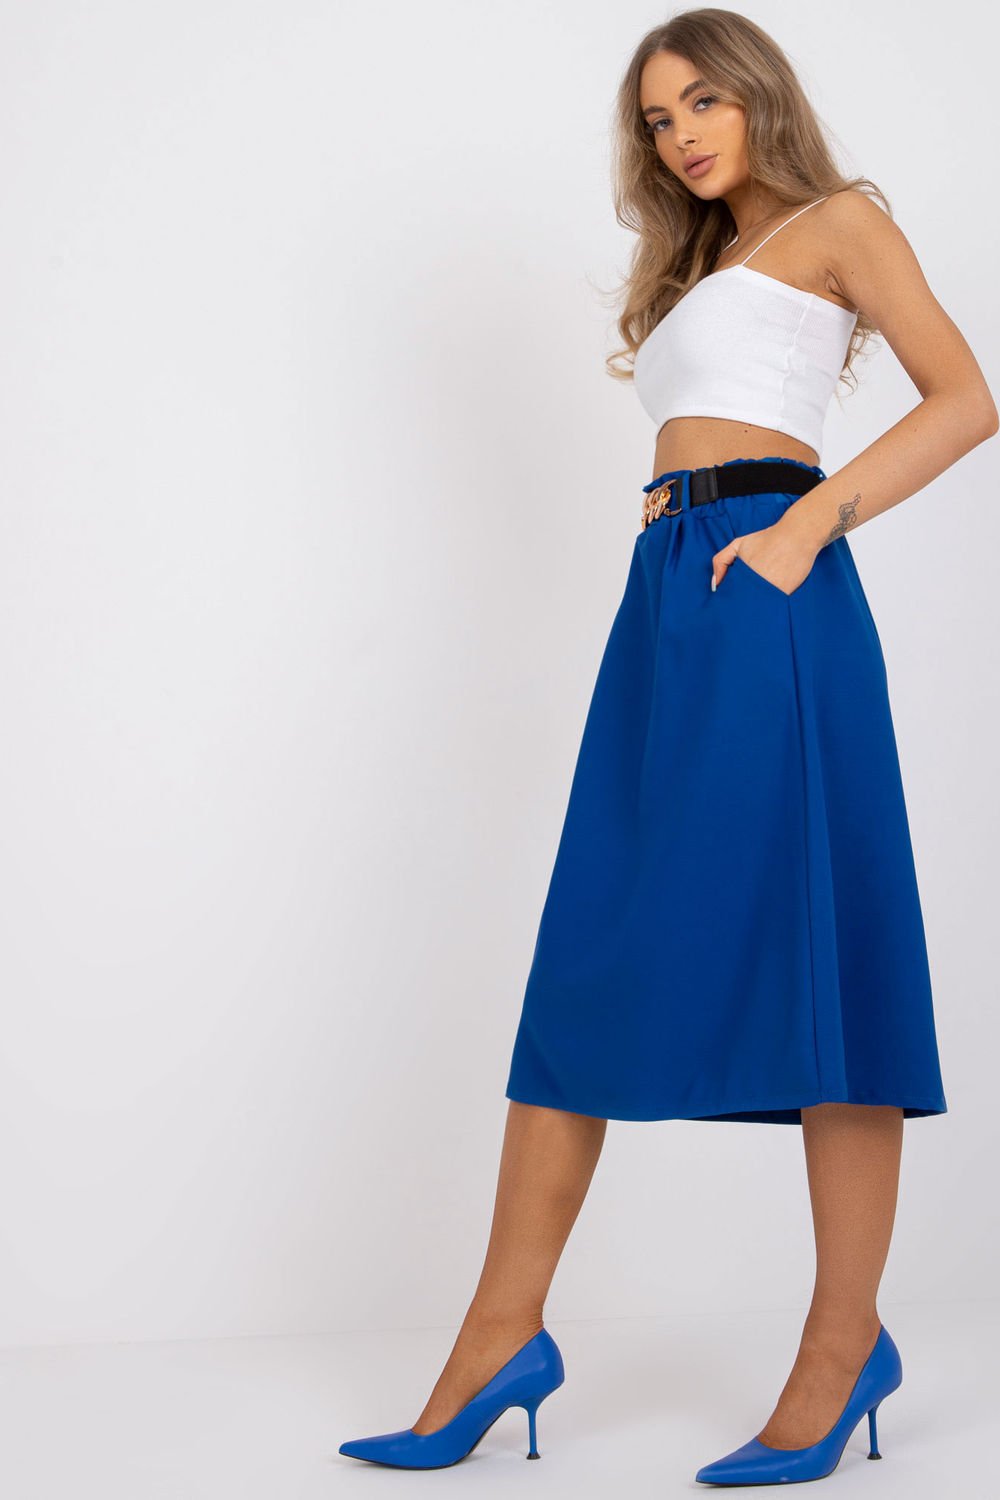 Skirt model 167486 Italy Moda Posh Styles Apparel